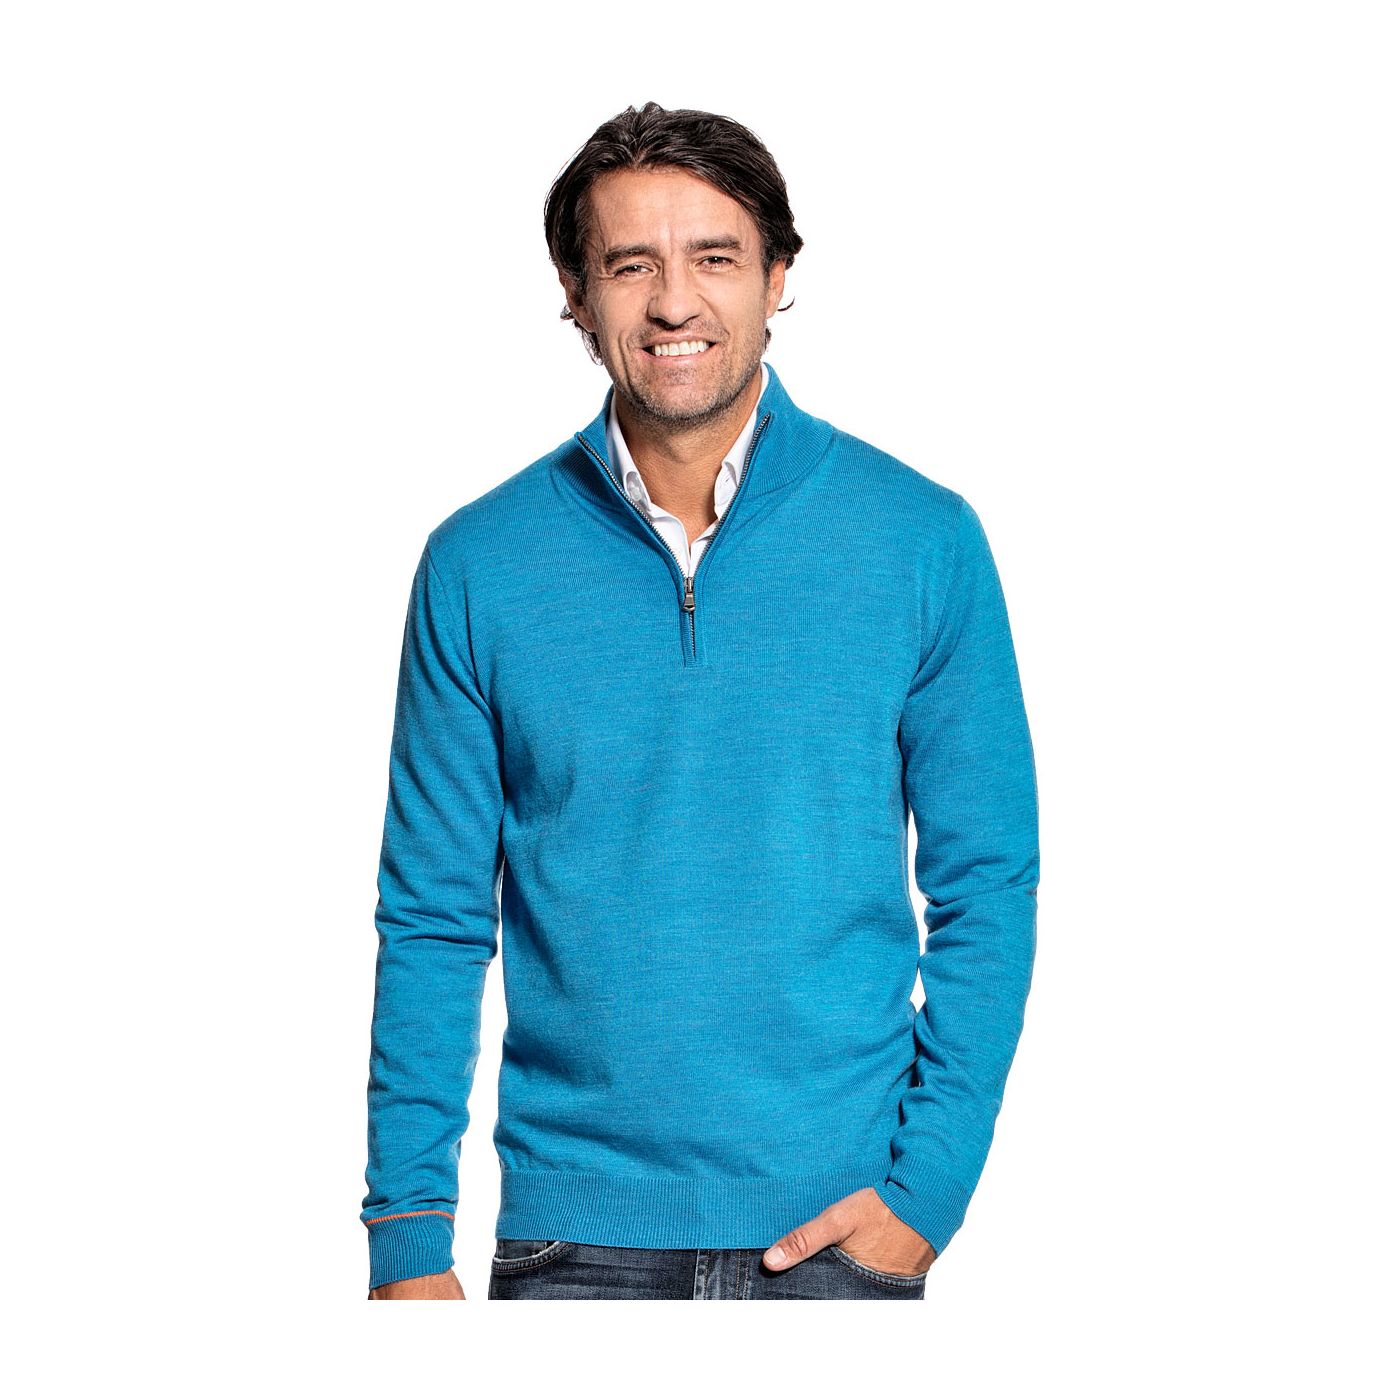 Half zip sweater for men made of Merino wool in Bright blue